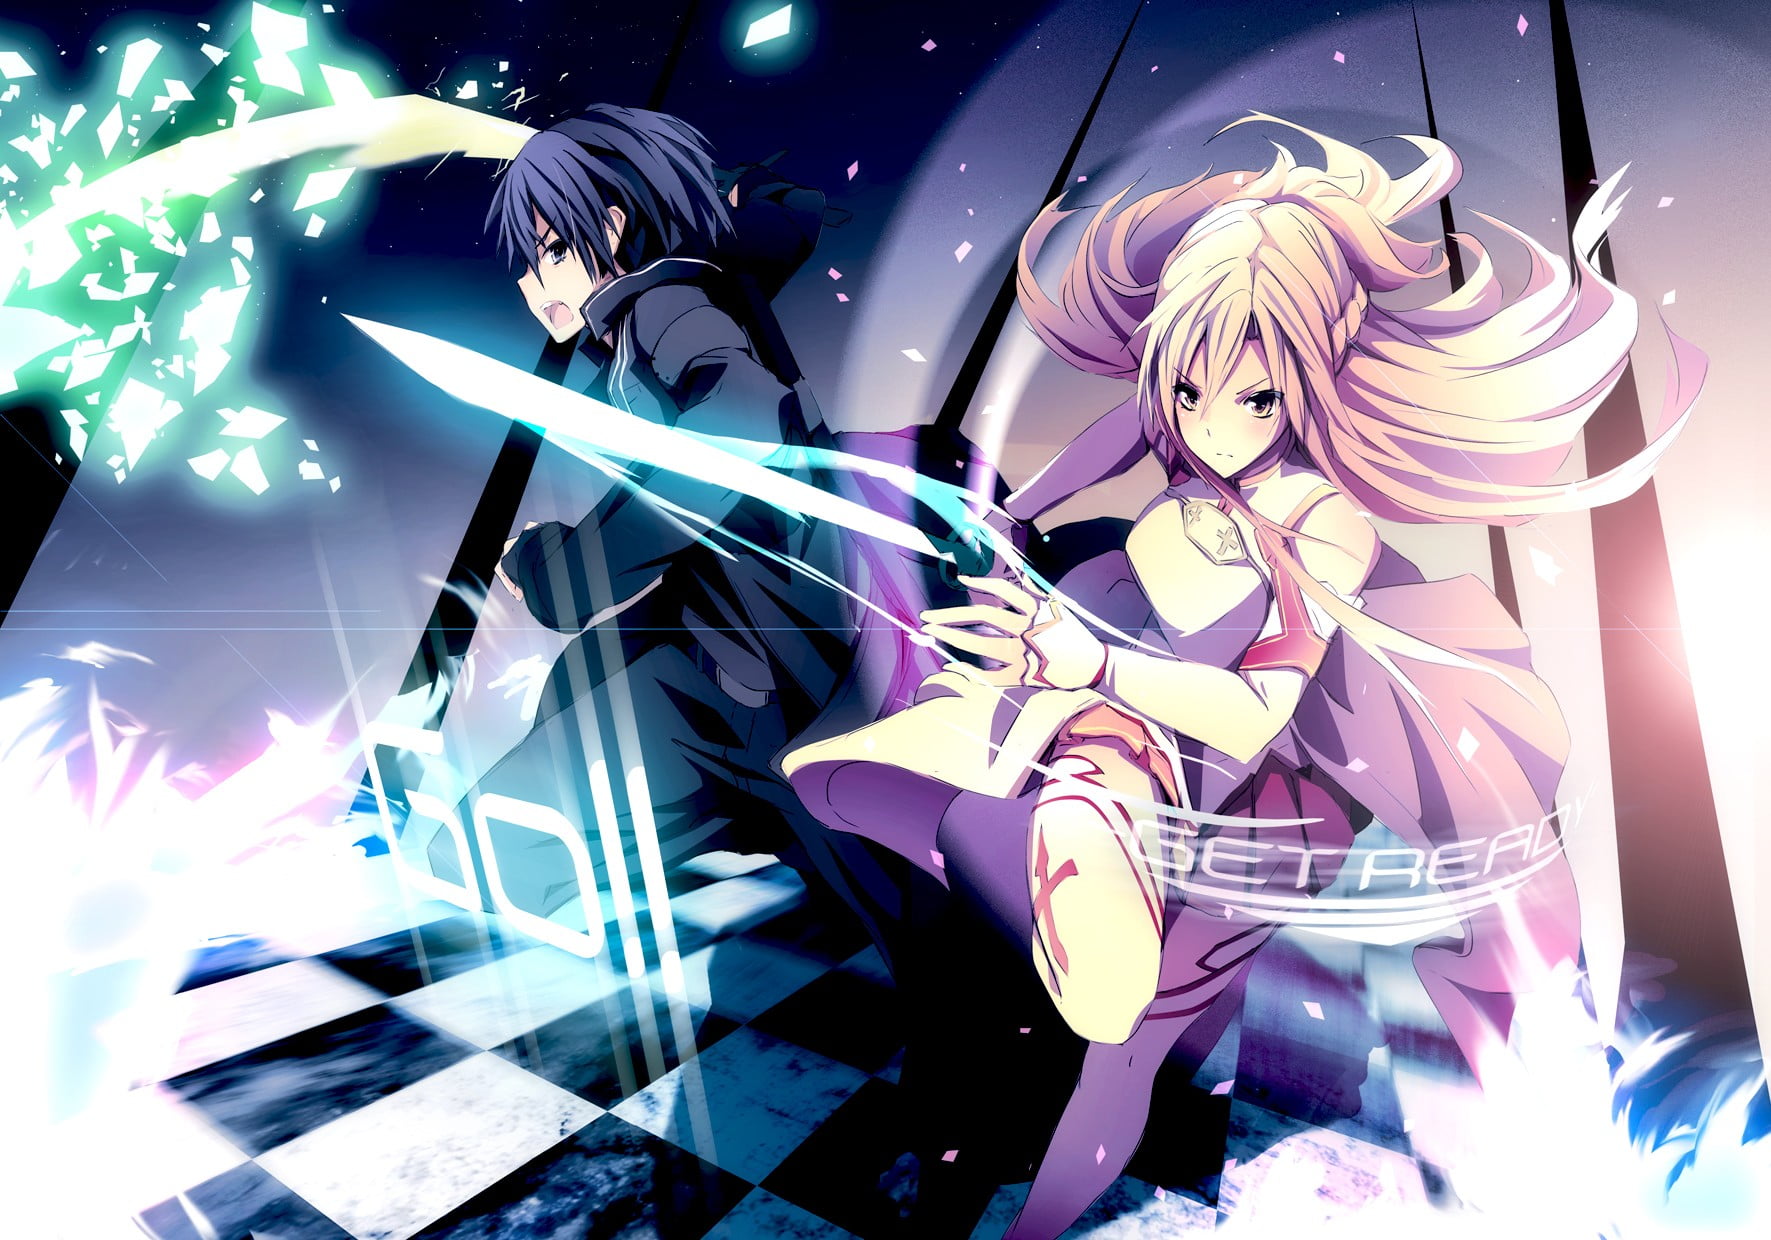 Sword Art Online Asuna and Kirito wallpaper, anime, anime girls